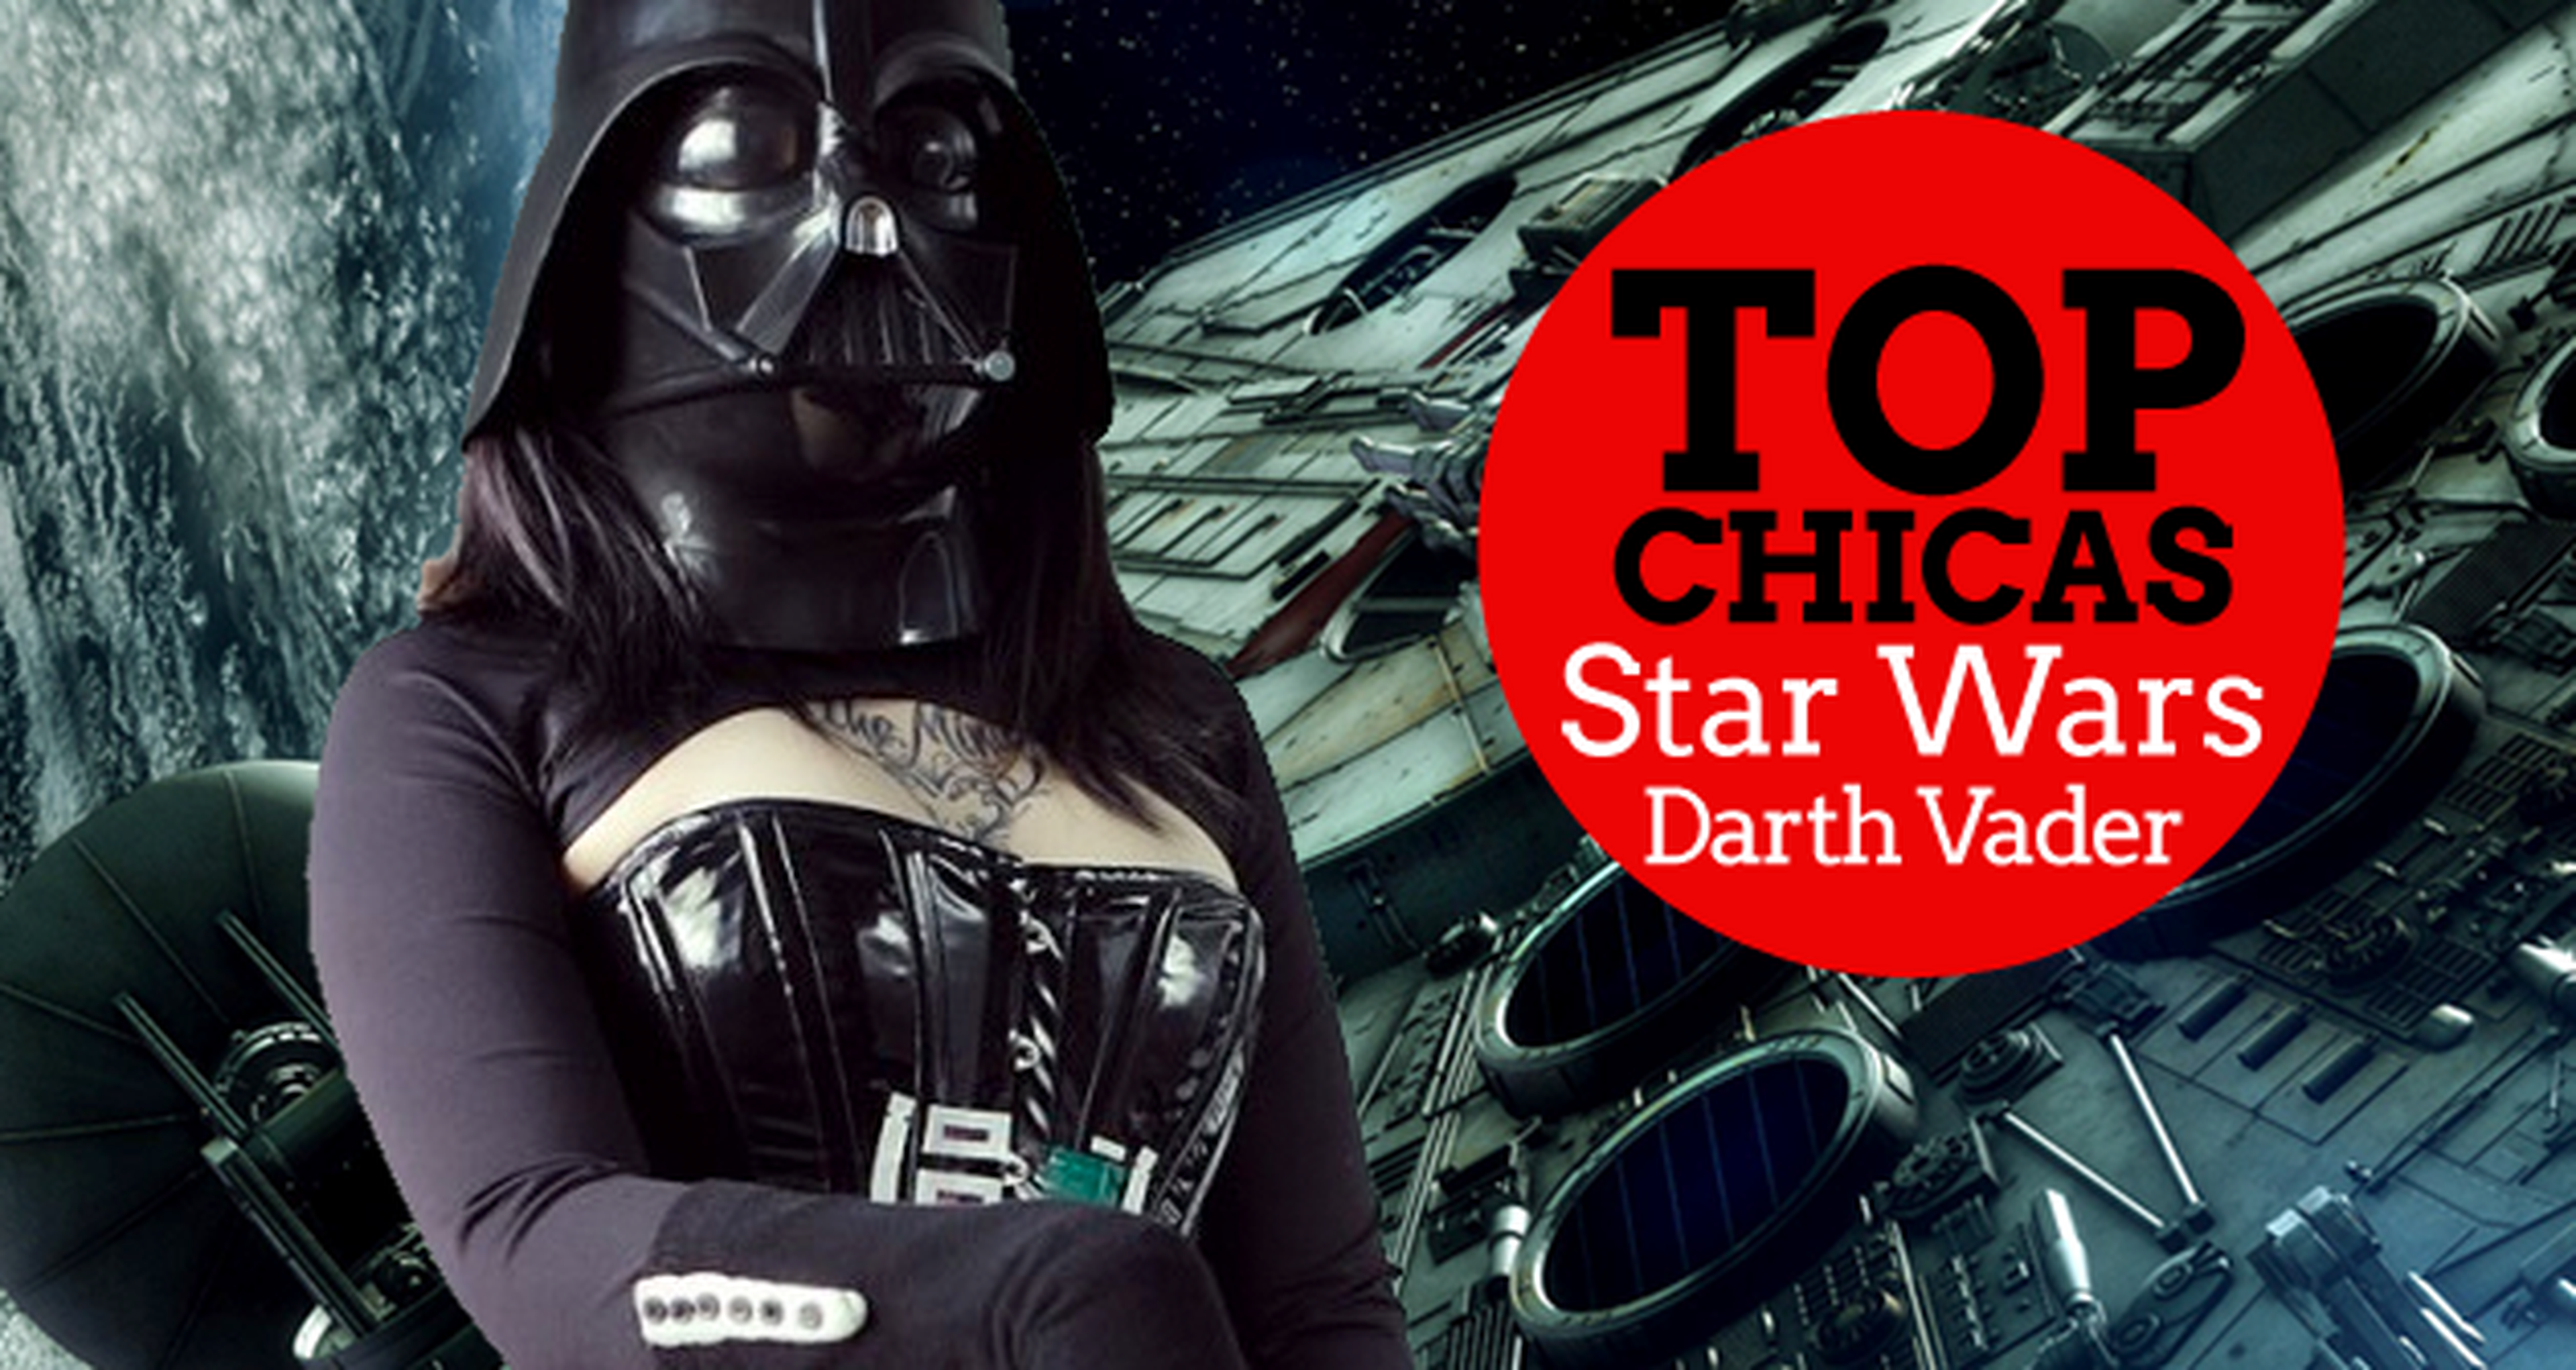 Top chicas Star Wars: Darth Vader